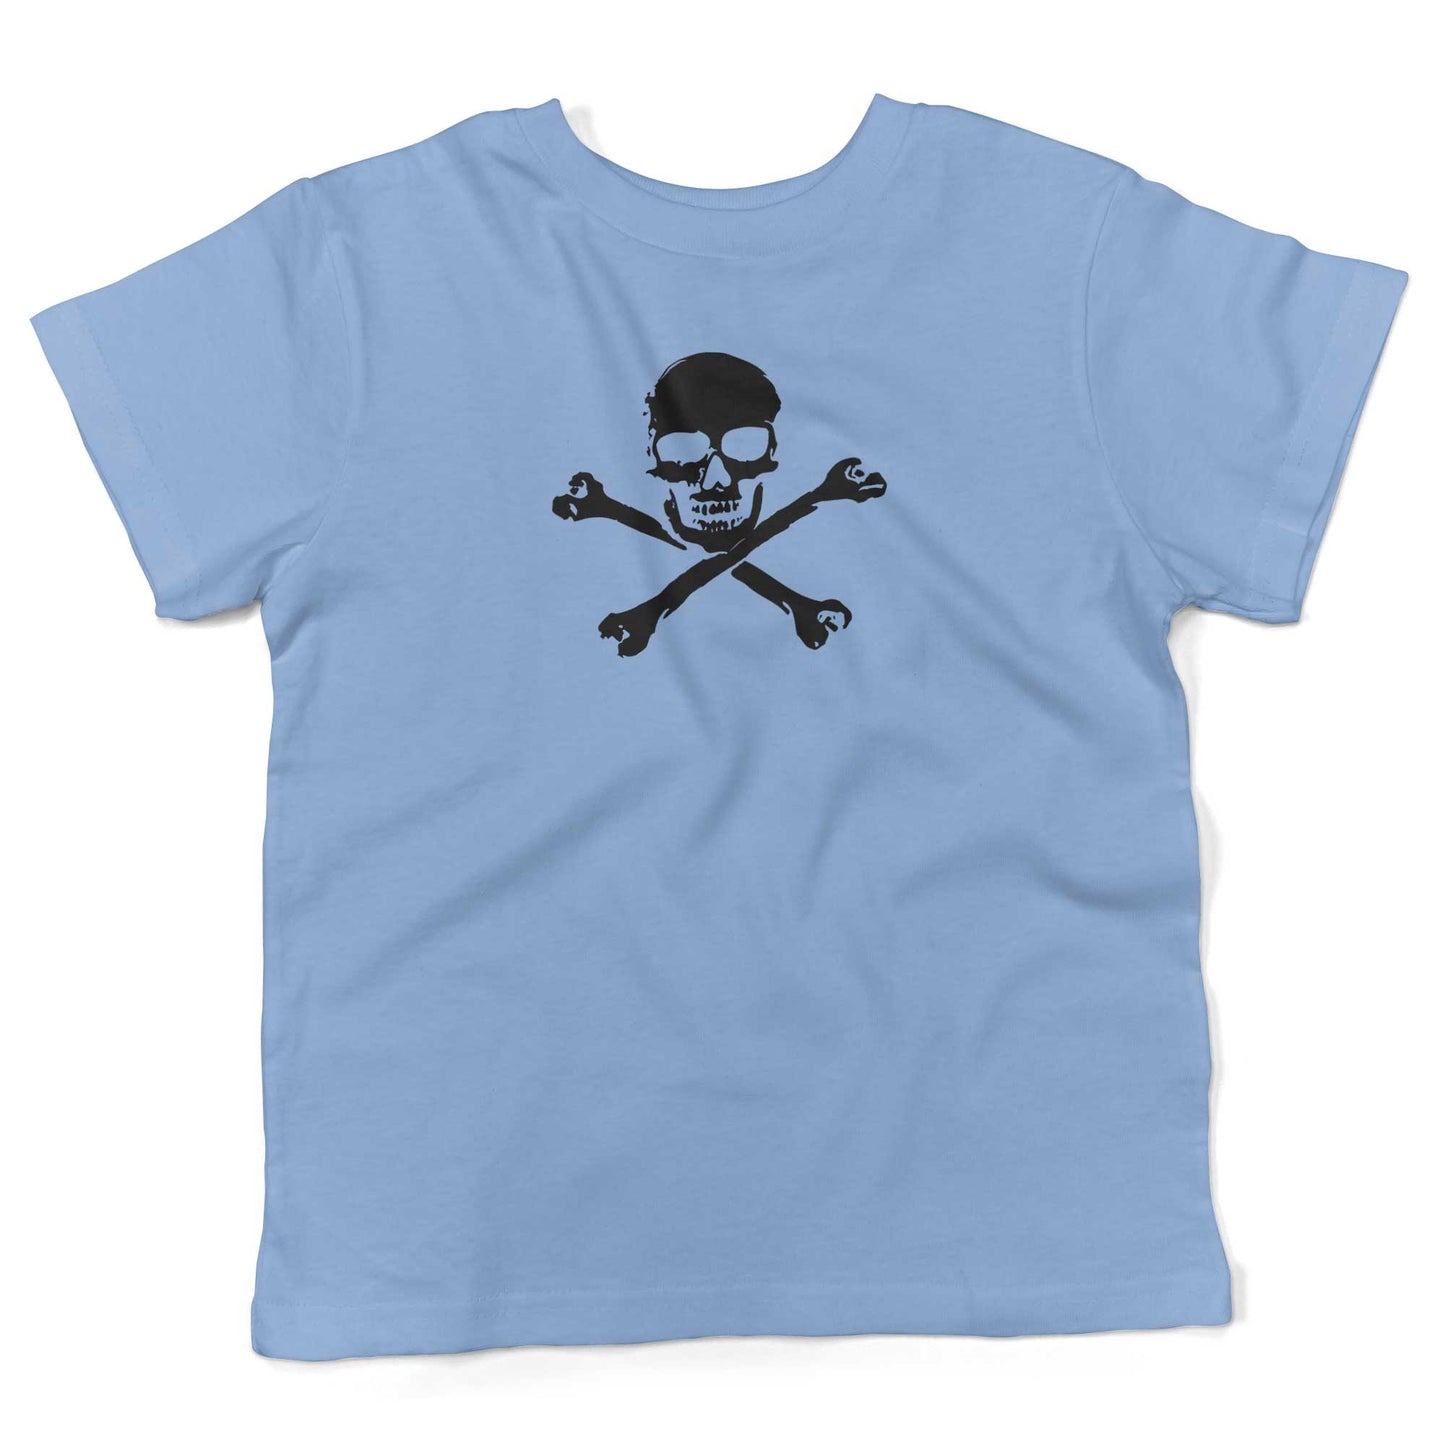 Skull And Crossbones Toddler Shirt-Organic Baby Blue-2T